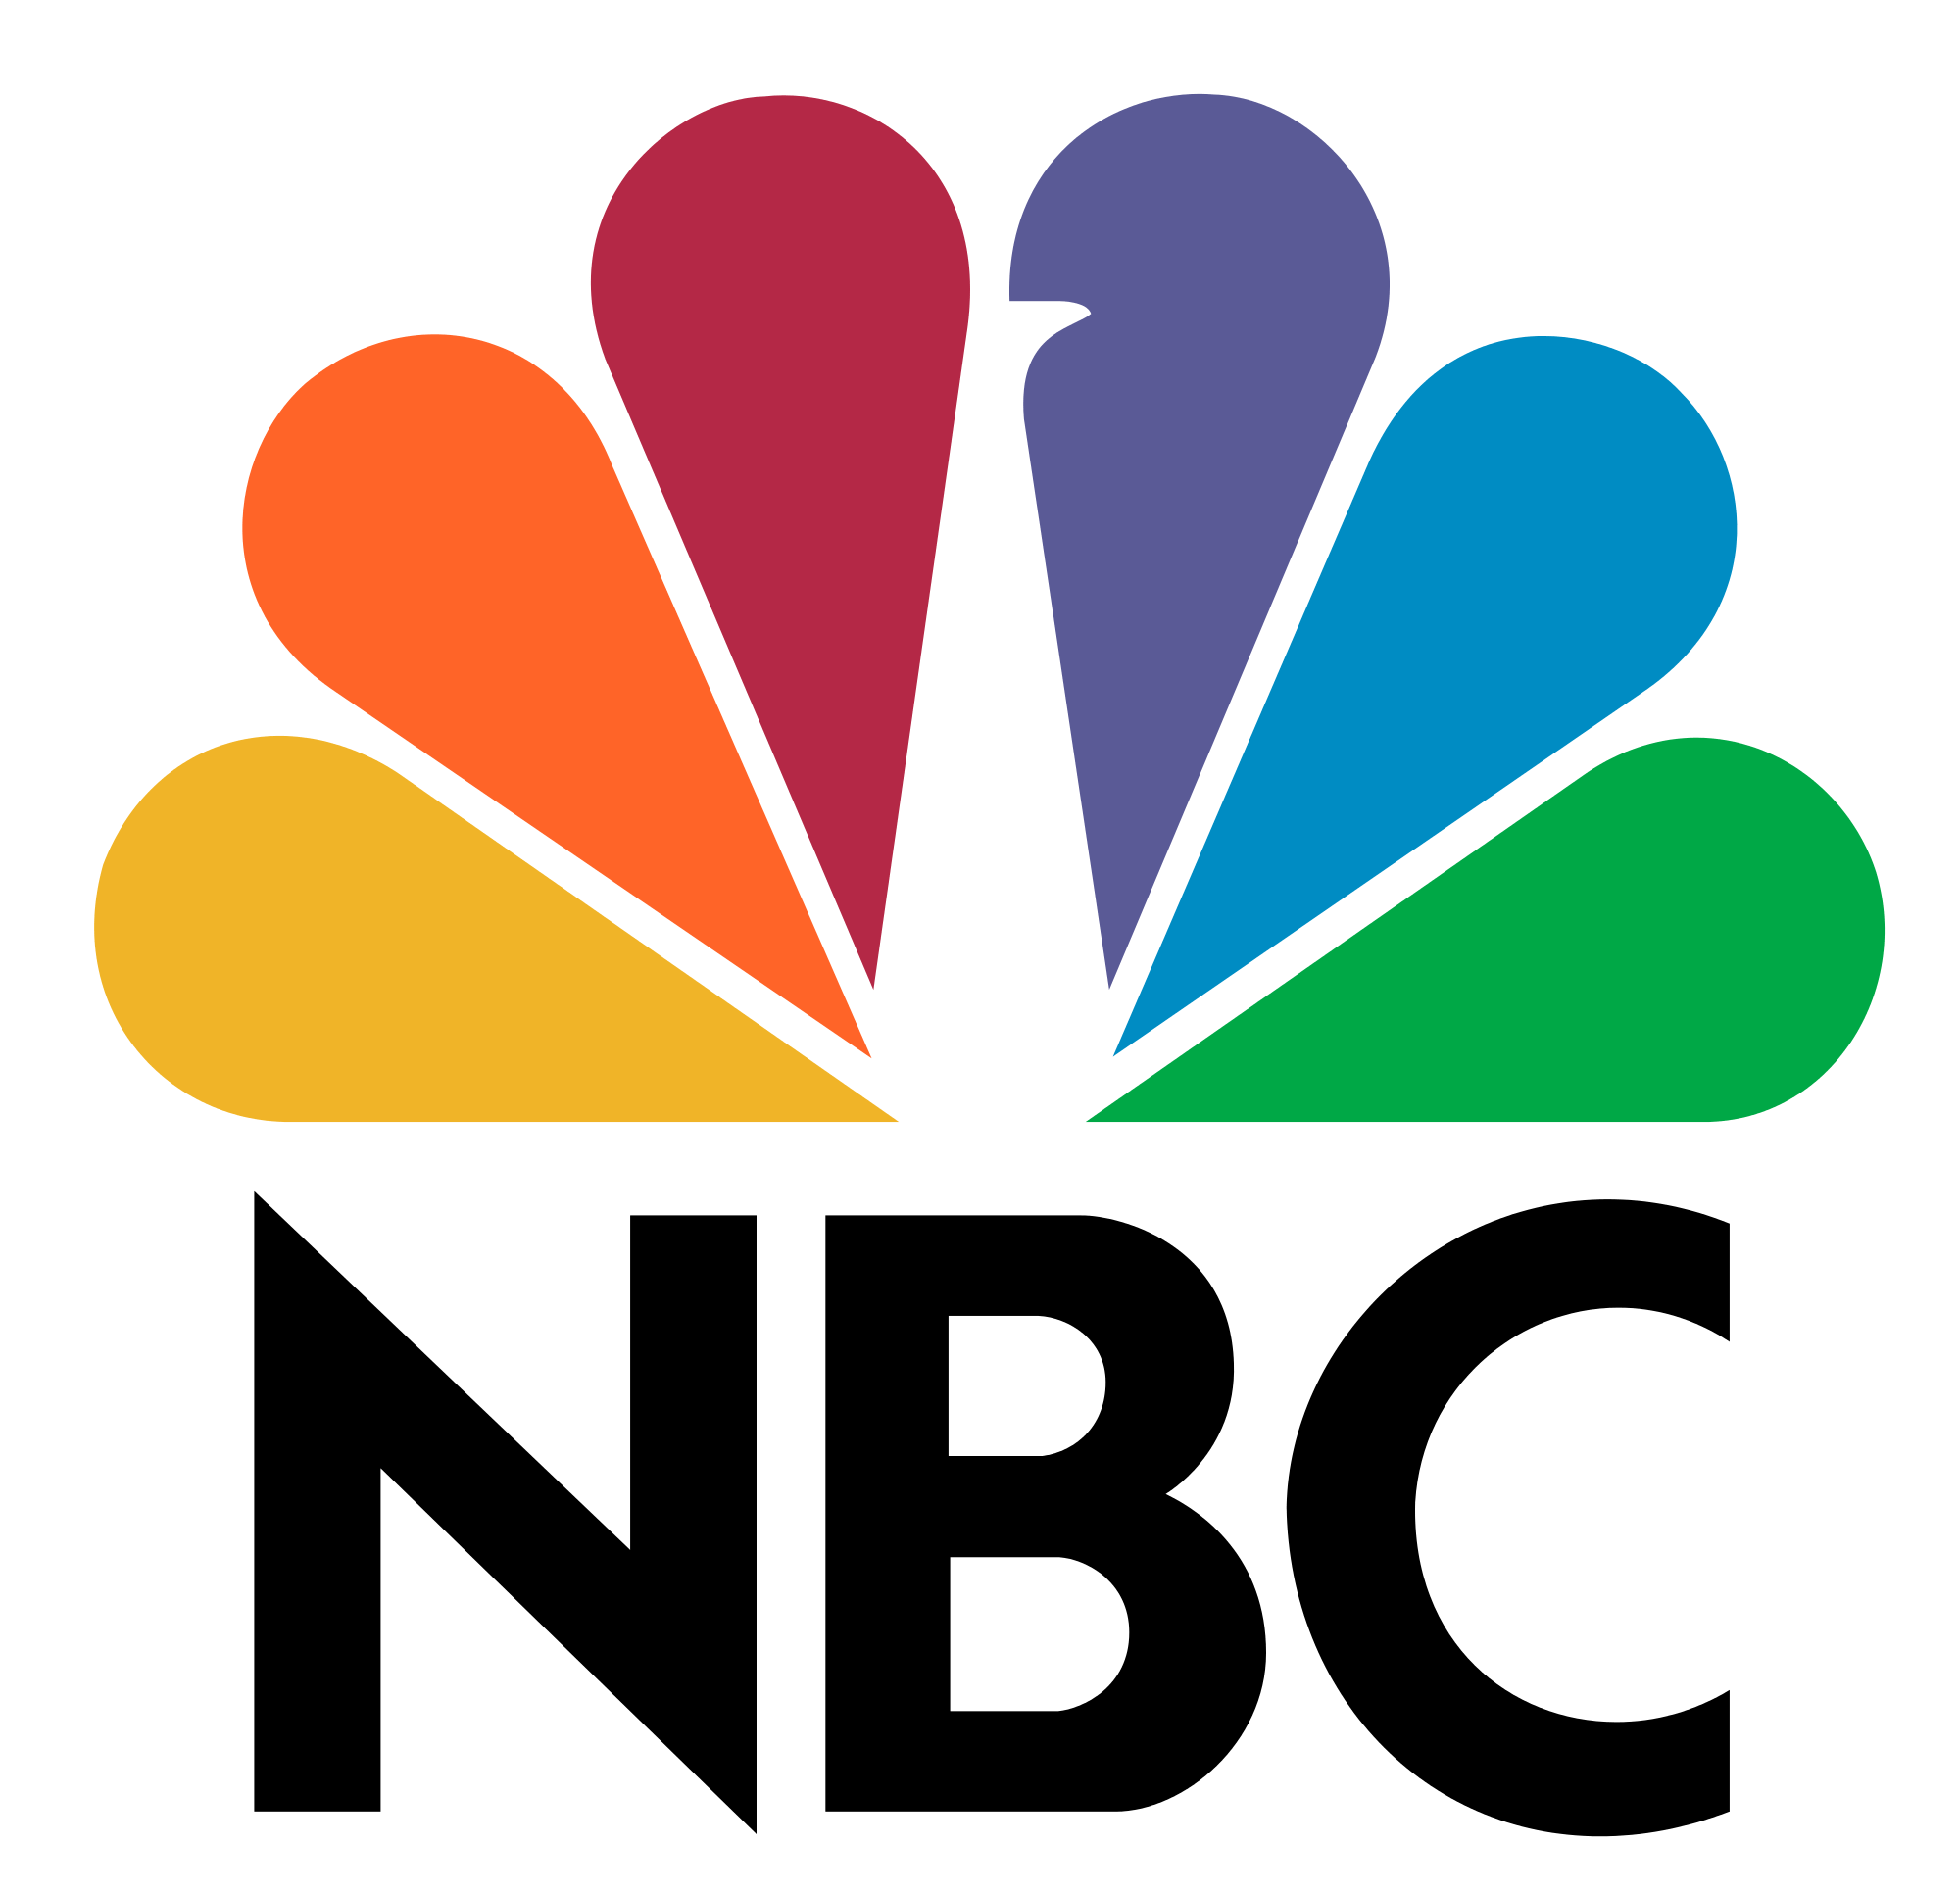 NBC_logo-1.svg